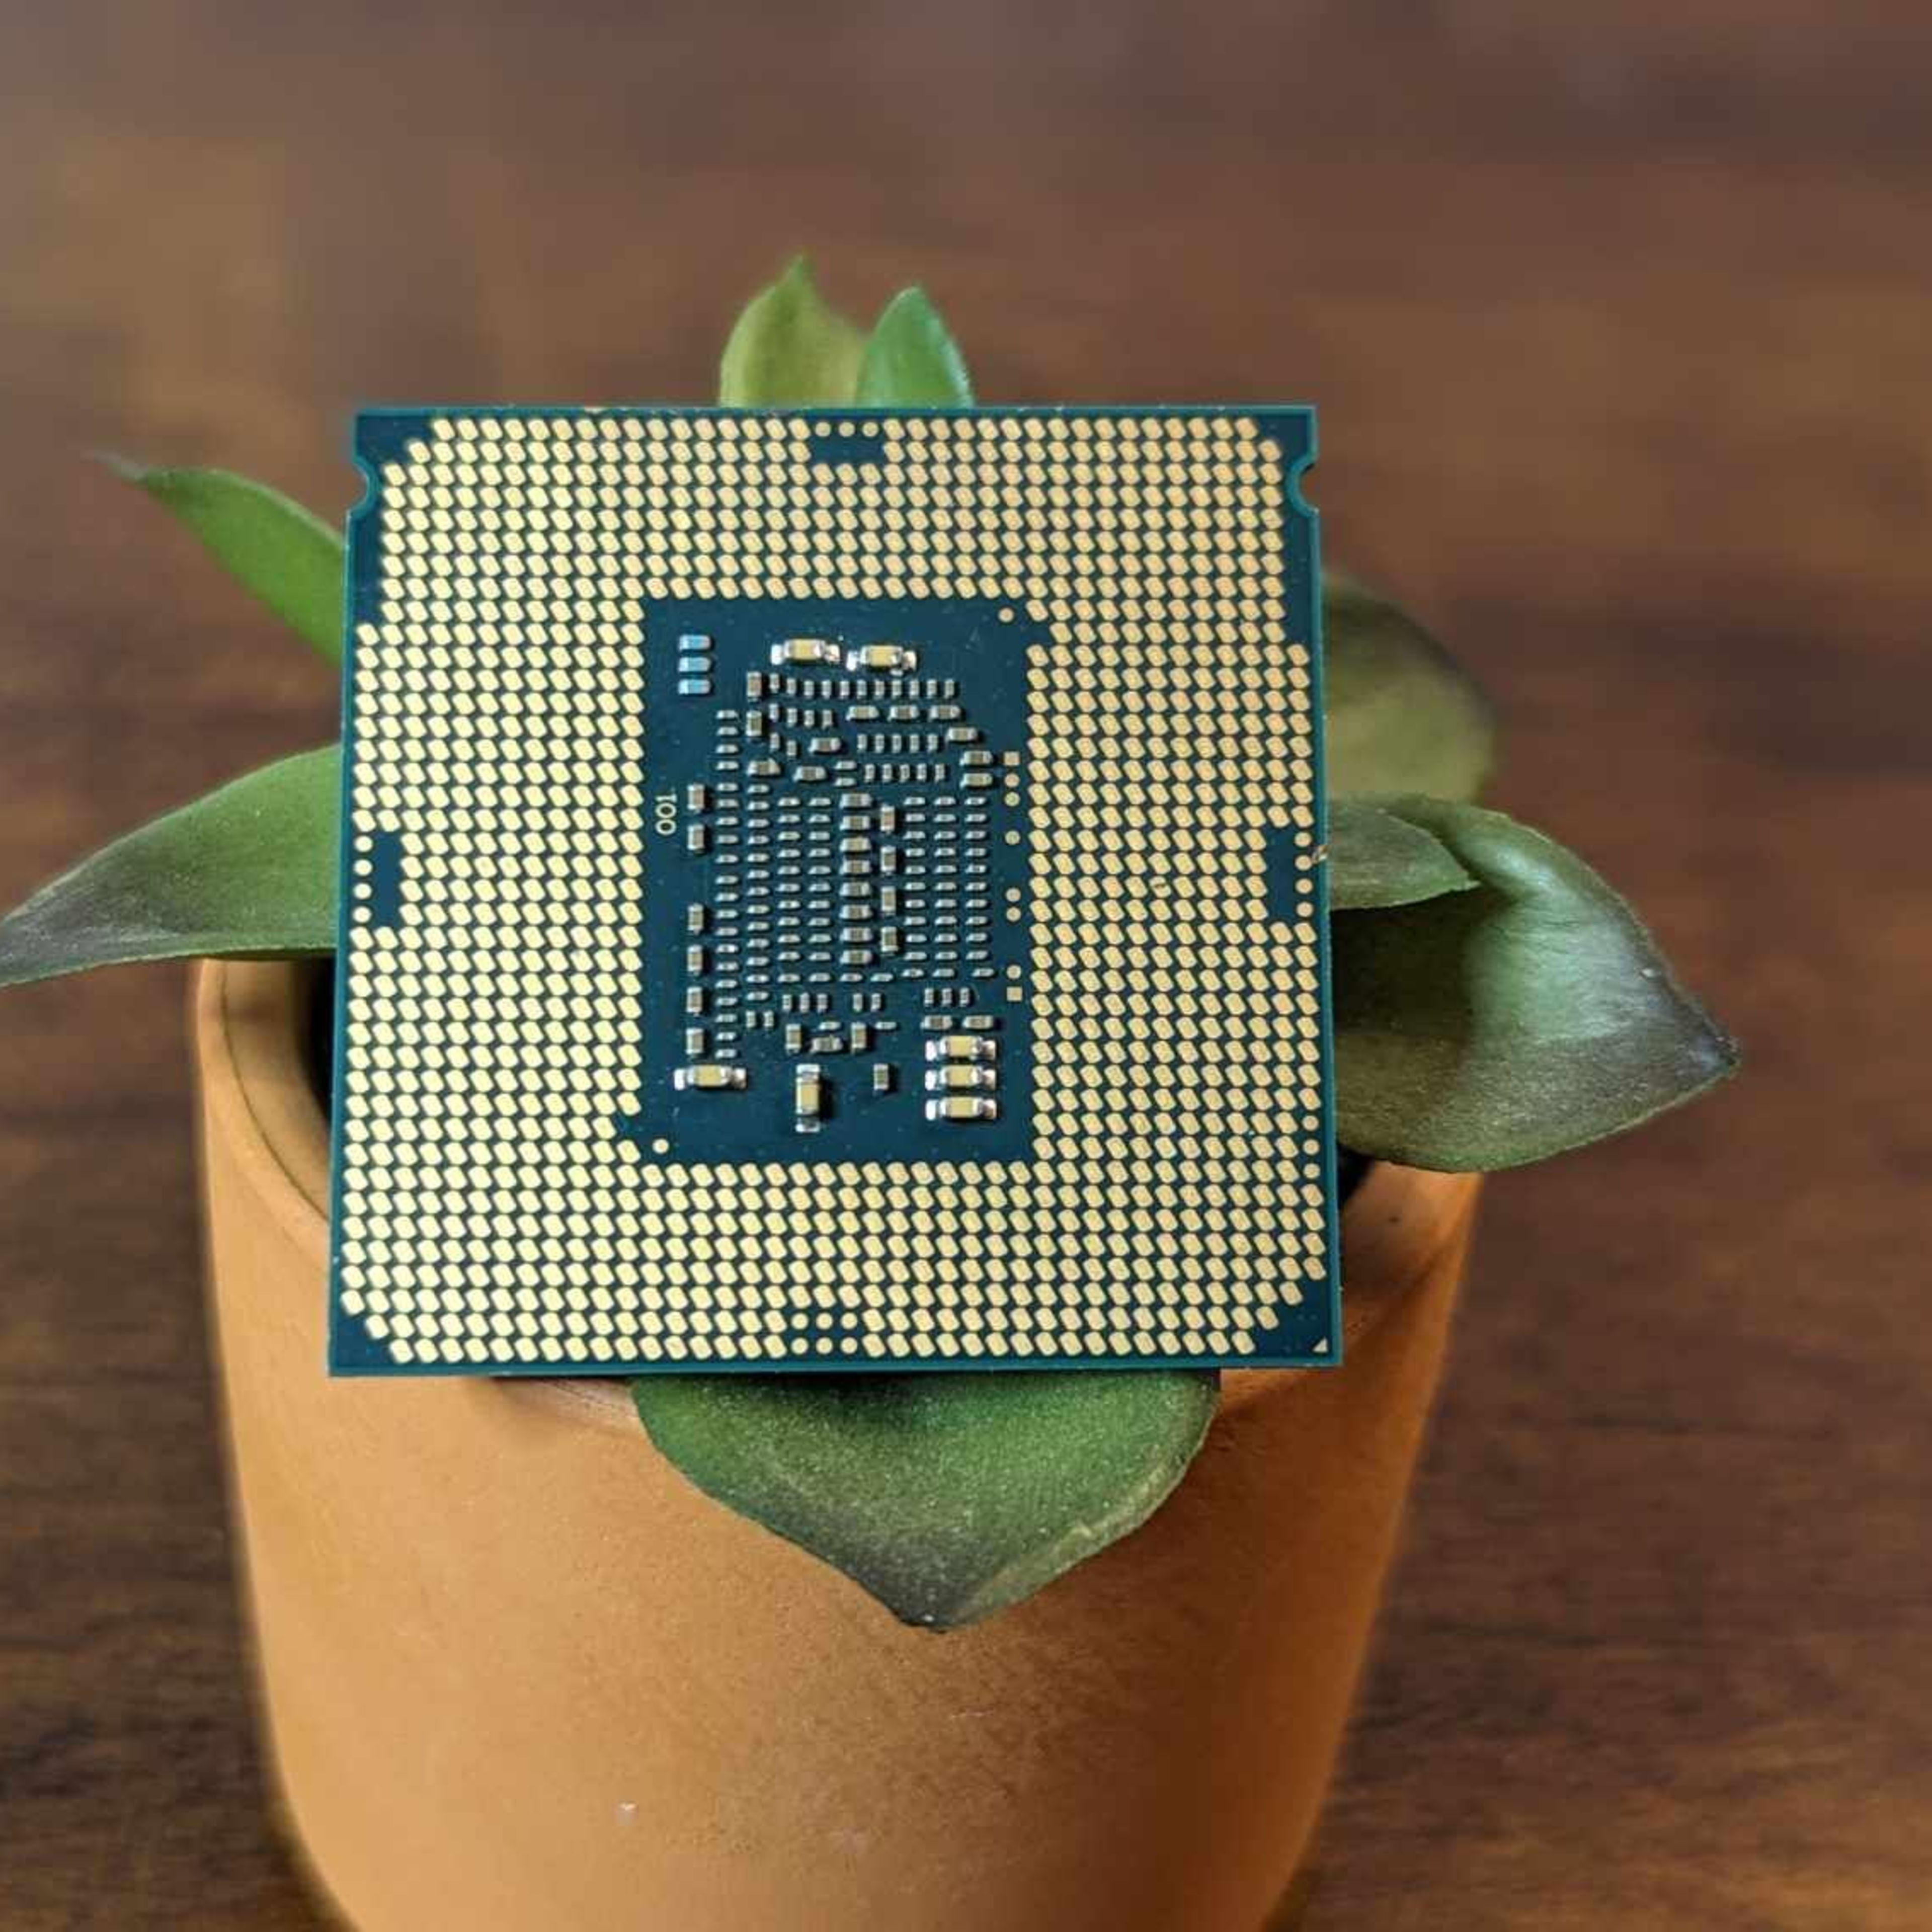 Intel i5-6500 - 4 Core/4 Thread - LGA1151 Socket - Intel 100/200 Chipset - Tested Working!